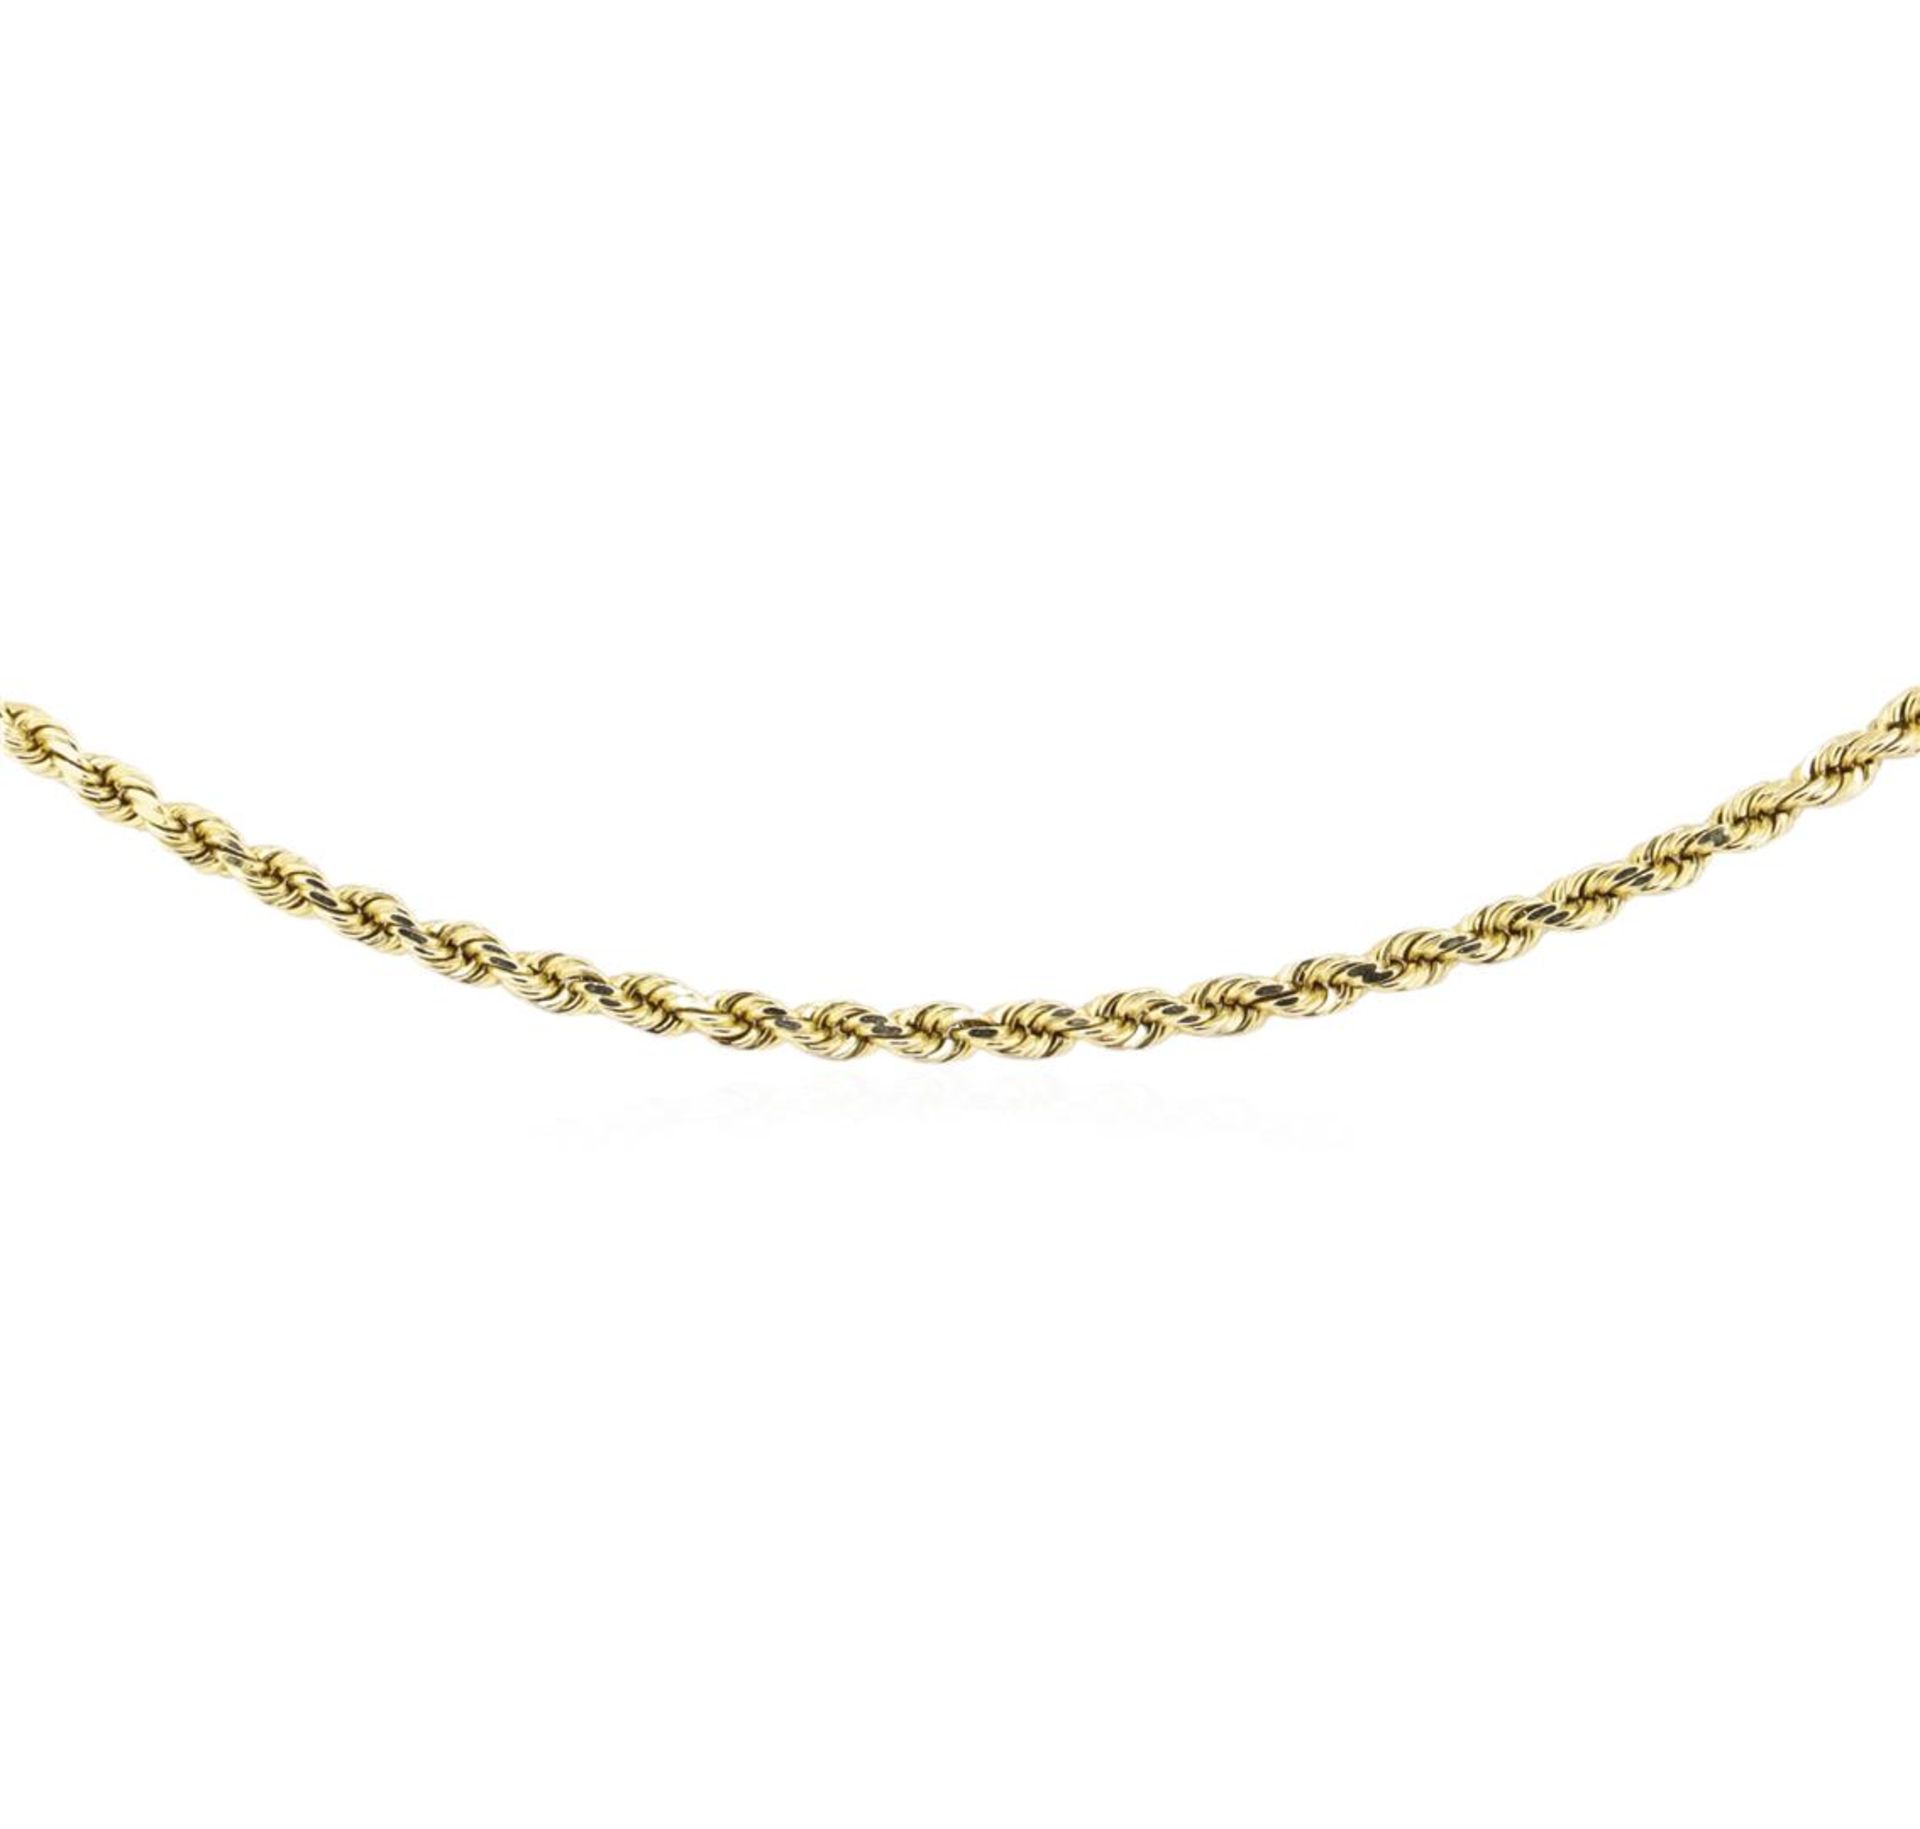 Twenty Inch Rope Chain - 14KT Yellow Gold - Image 2 of 2